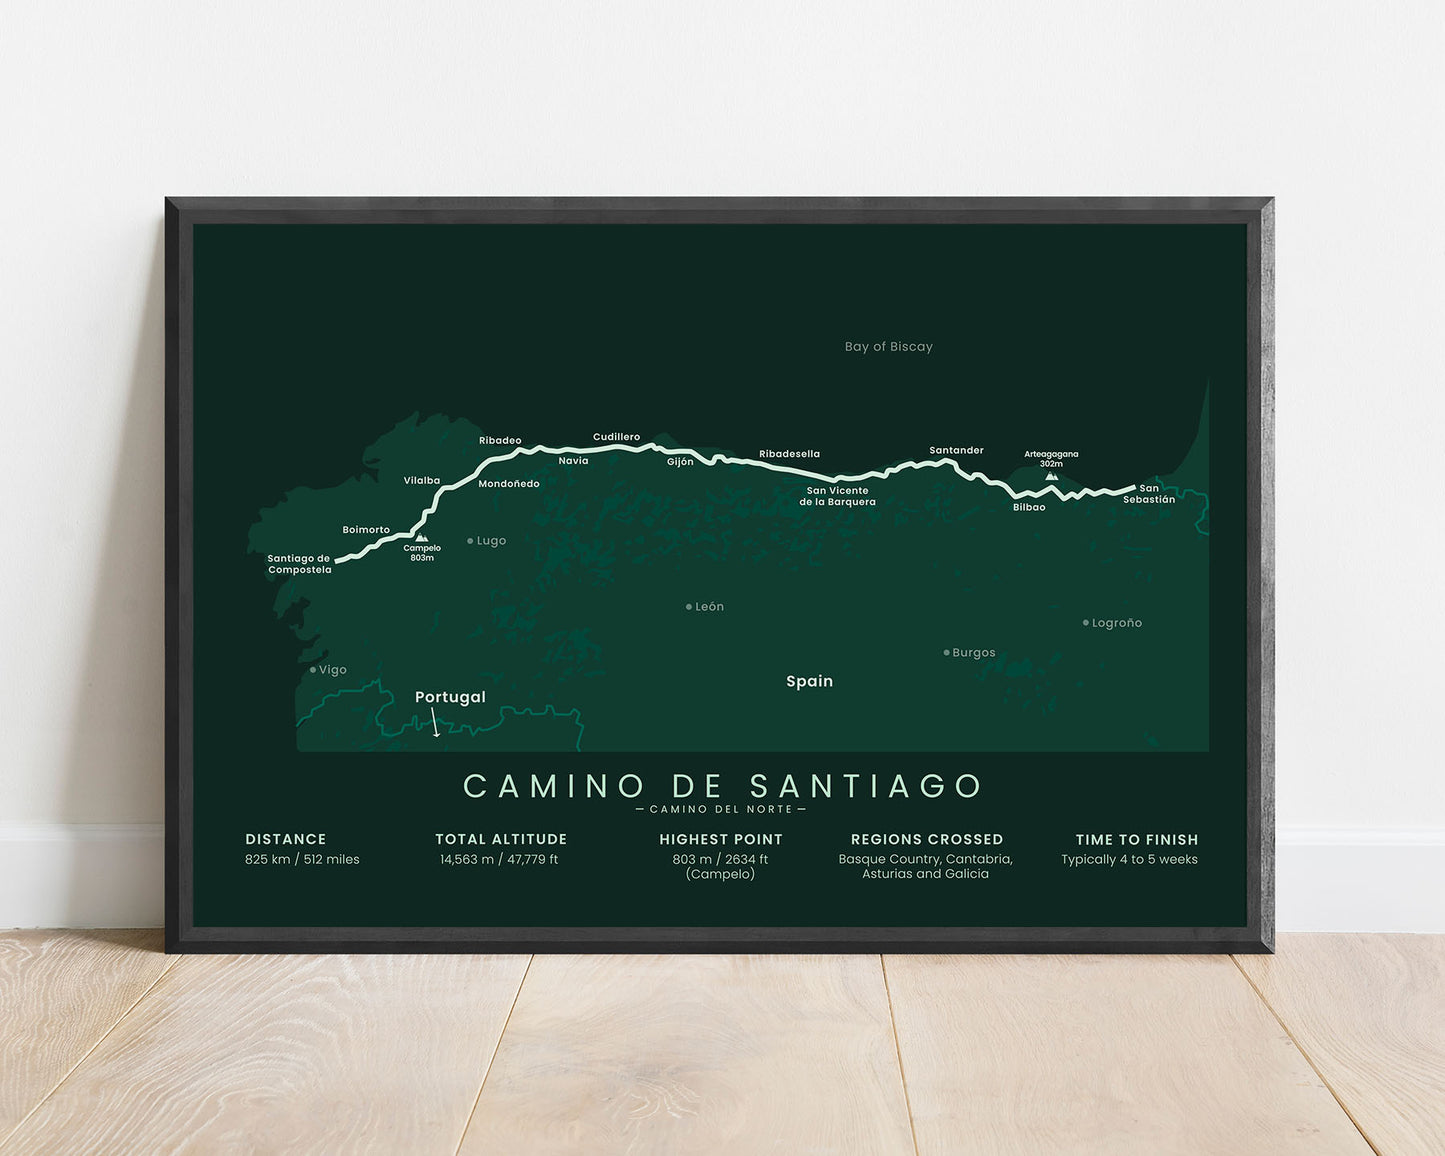 Camino del Norte (Spain) trek poster with green background